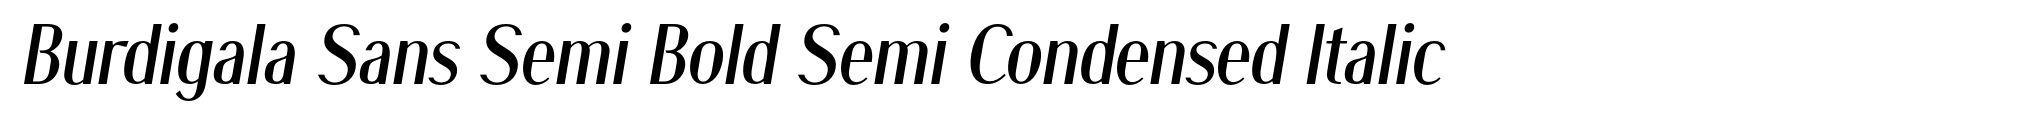 Burdigala Sans Semi Bold Semi Condensed Italic image